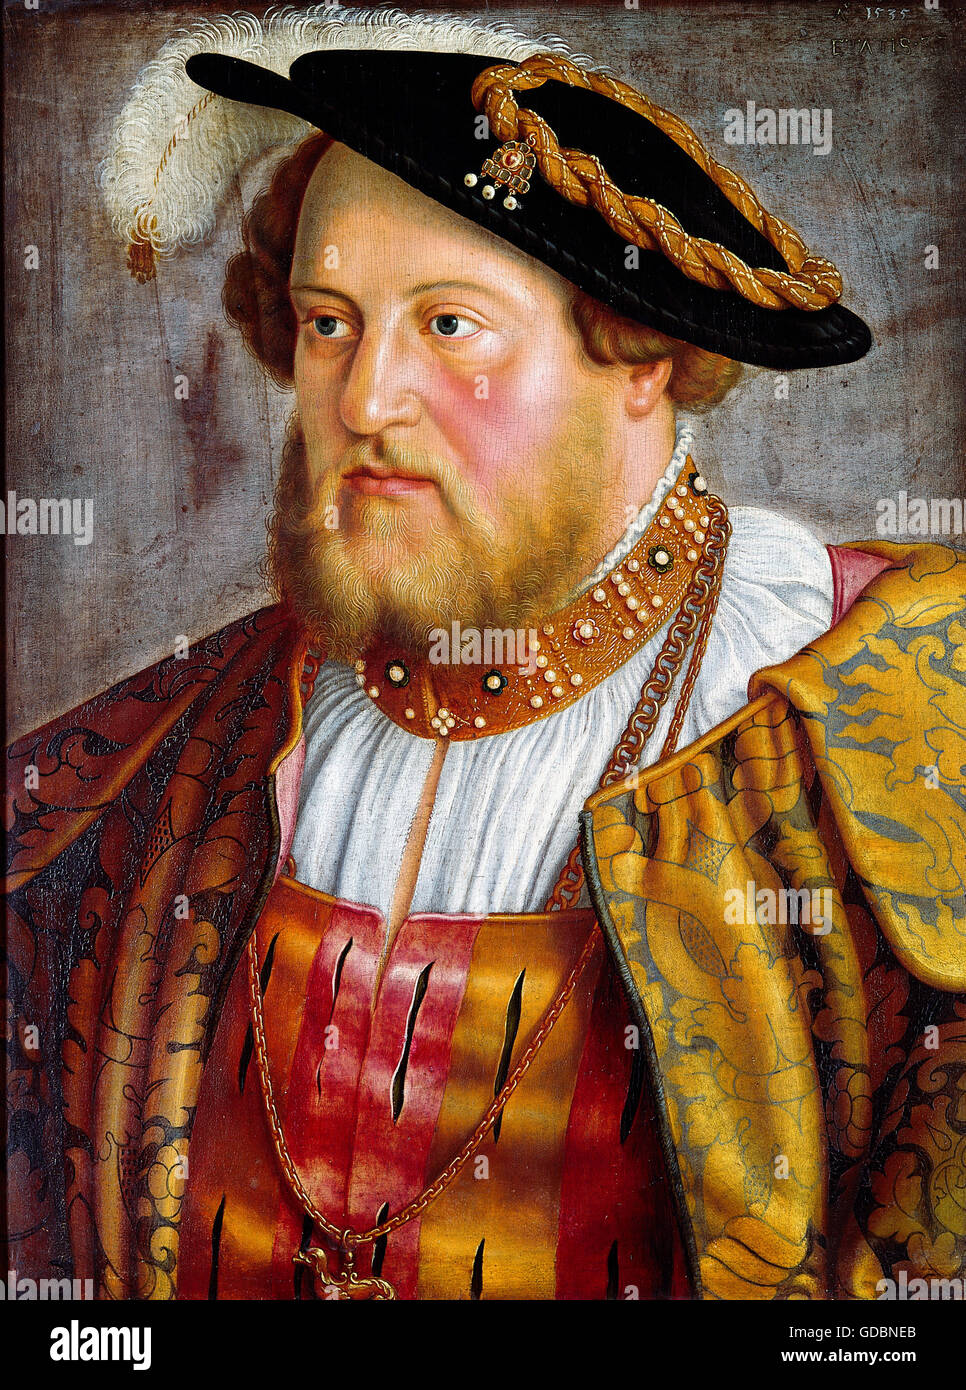 Otto Henry (Ottheinrich), 10.4.1502 - 12.2.1559, Elector Palatine 1556 - 1559, portrait, painting by Barthel Beham, 1535, oil on panel, 43 cm x 32 cm, Alte Pinakothek, Munich, Stock Photo